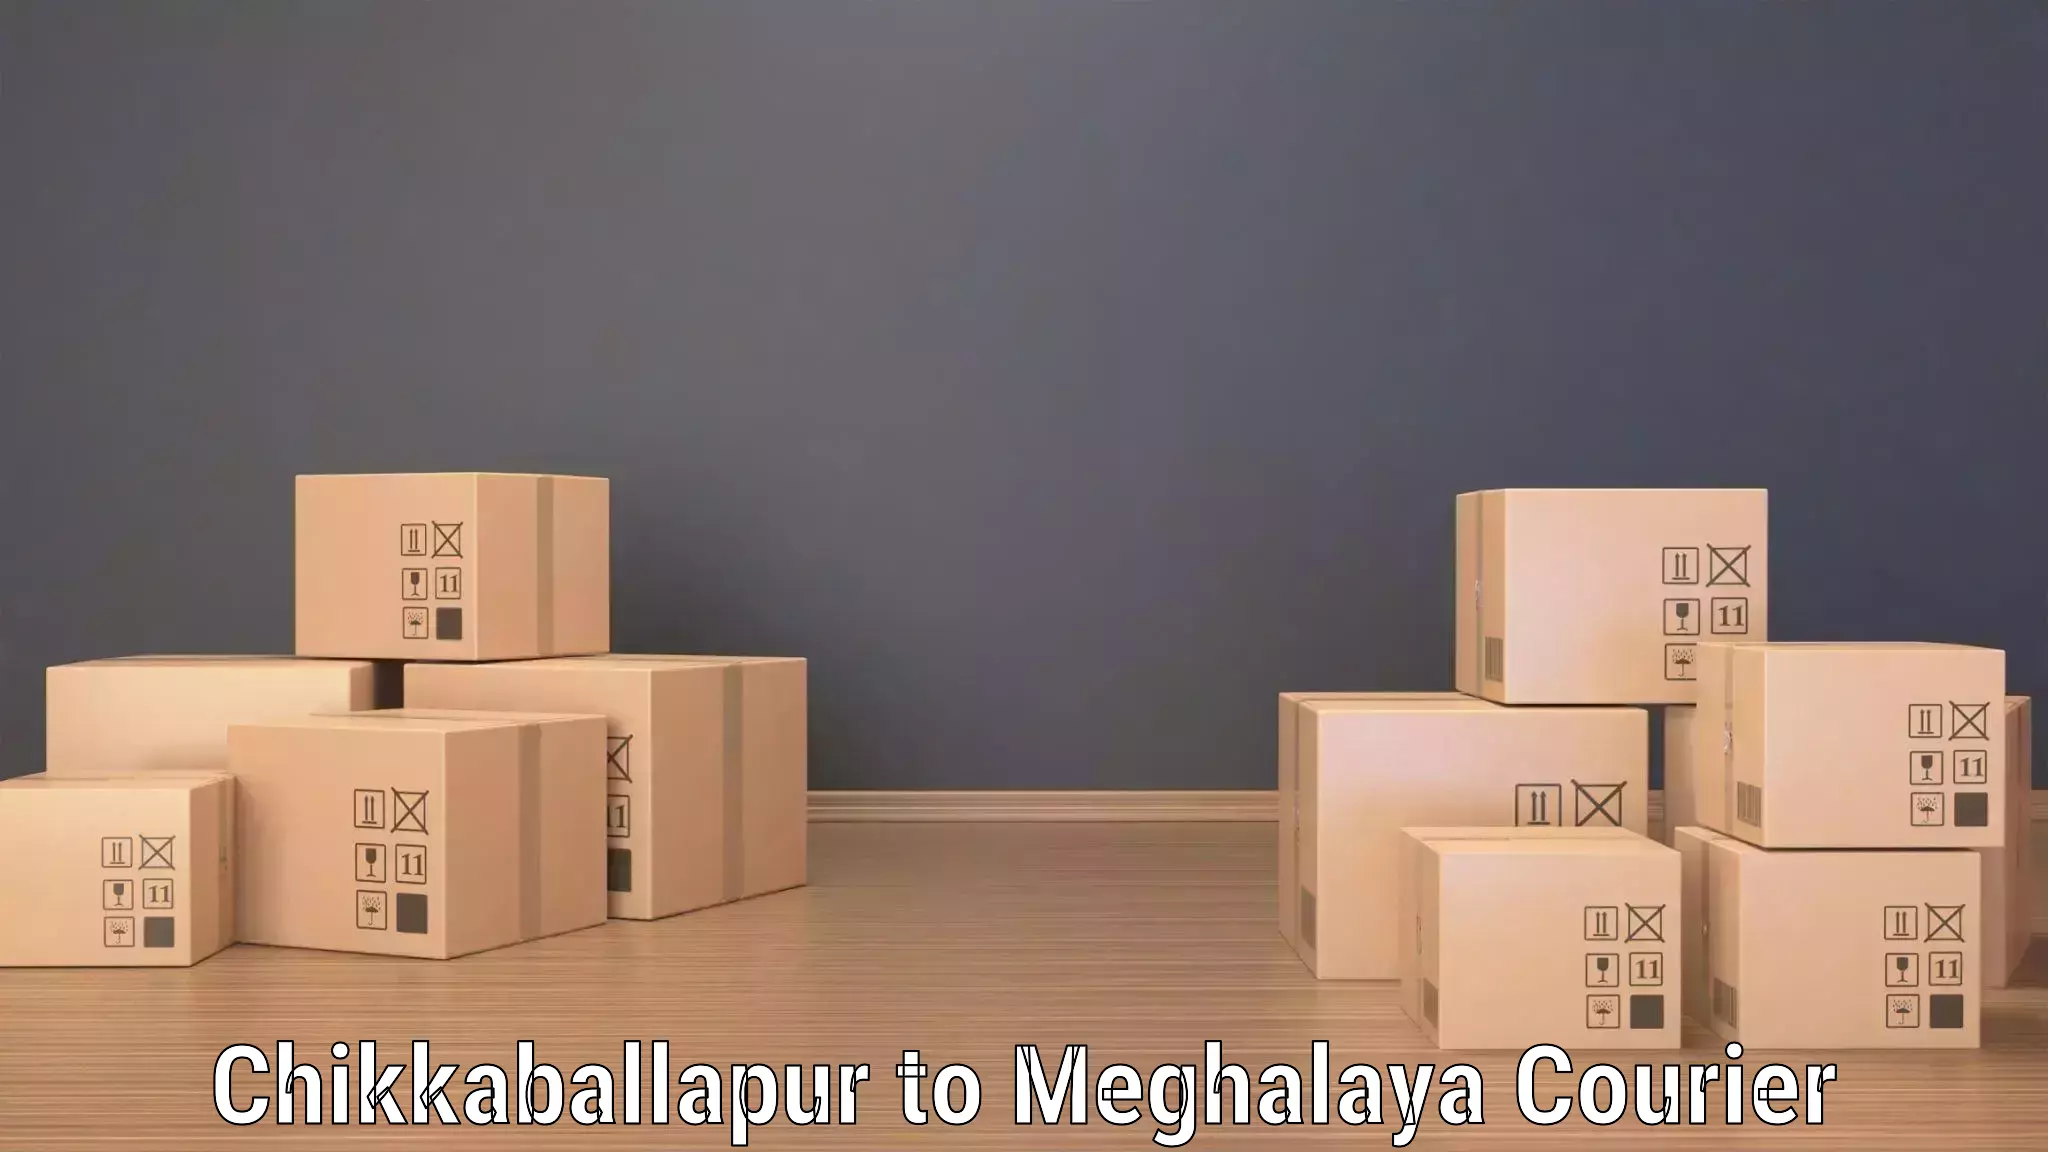 Courier service partnerships Chikkaballapur to Dkhiah West